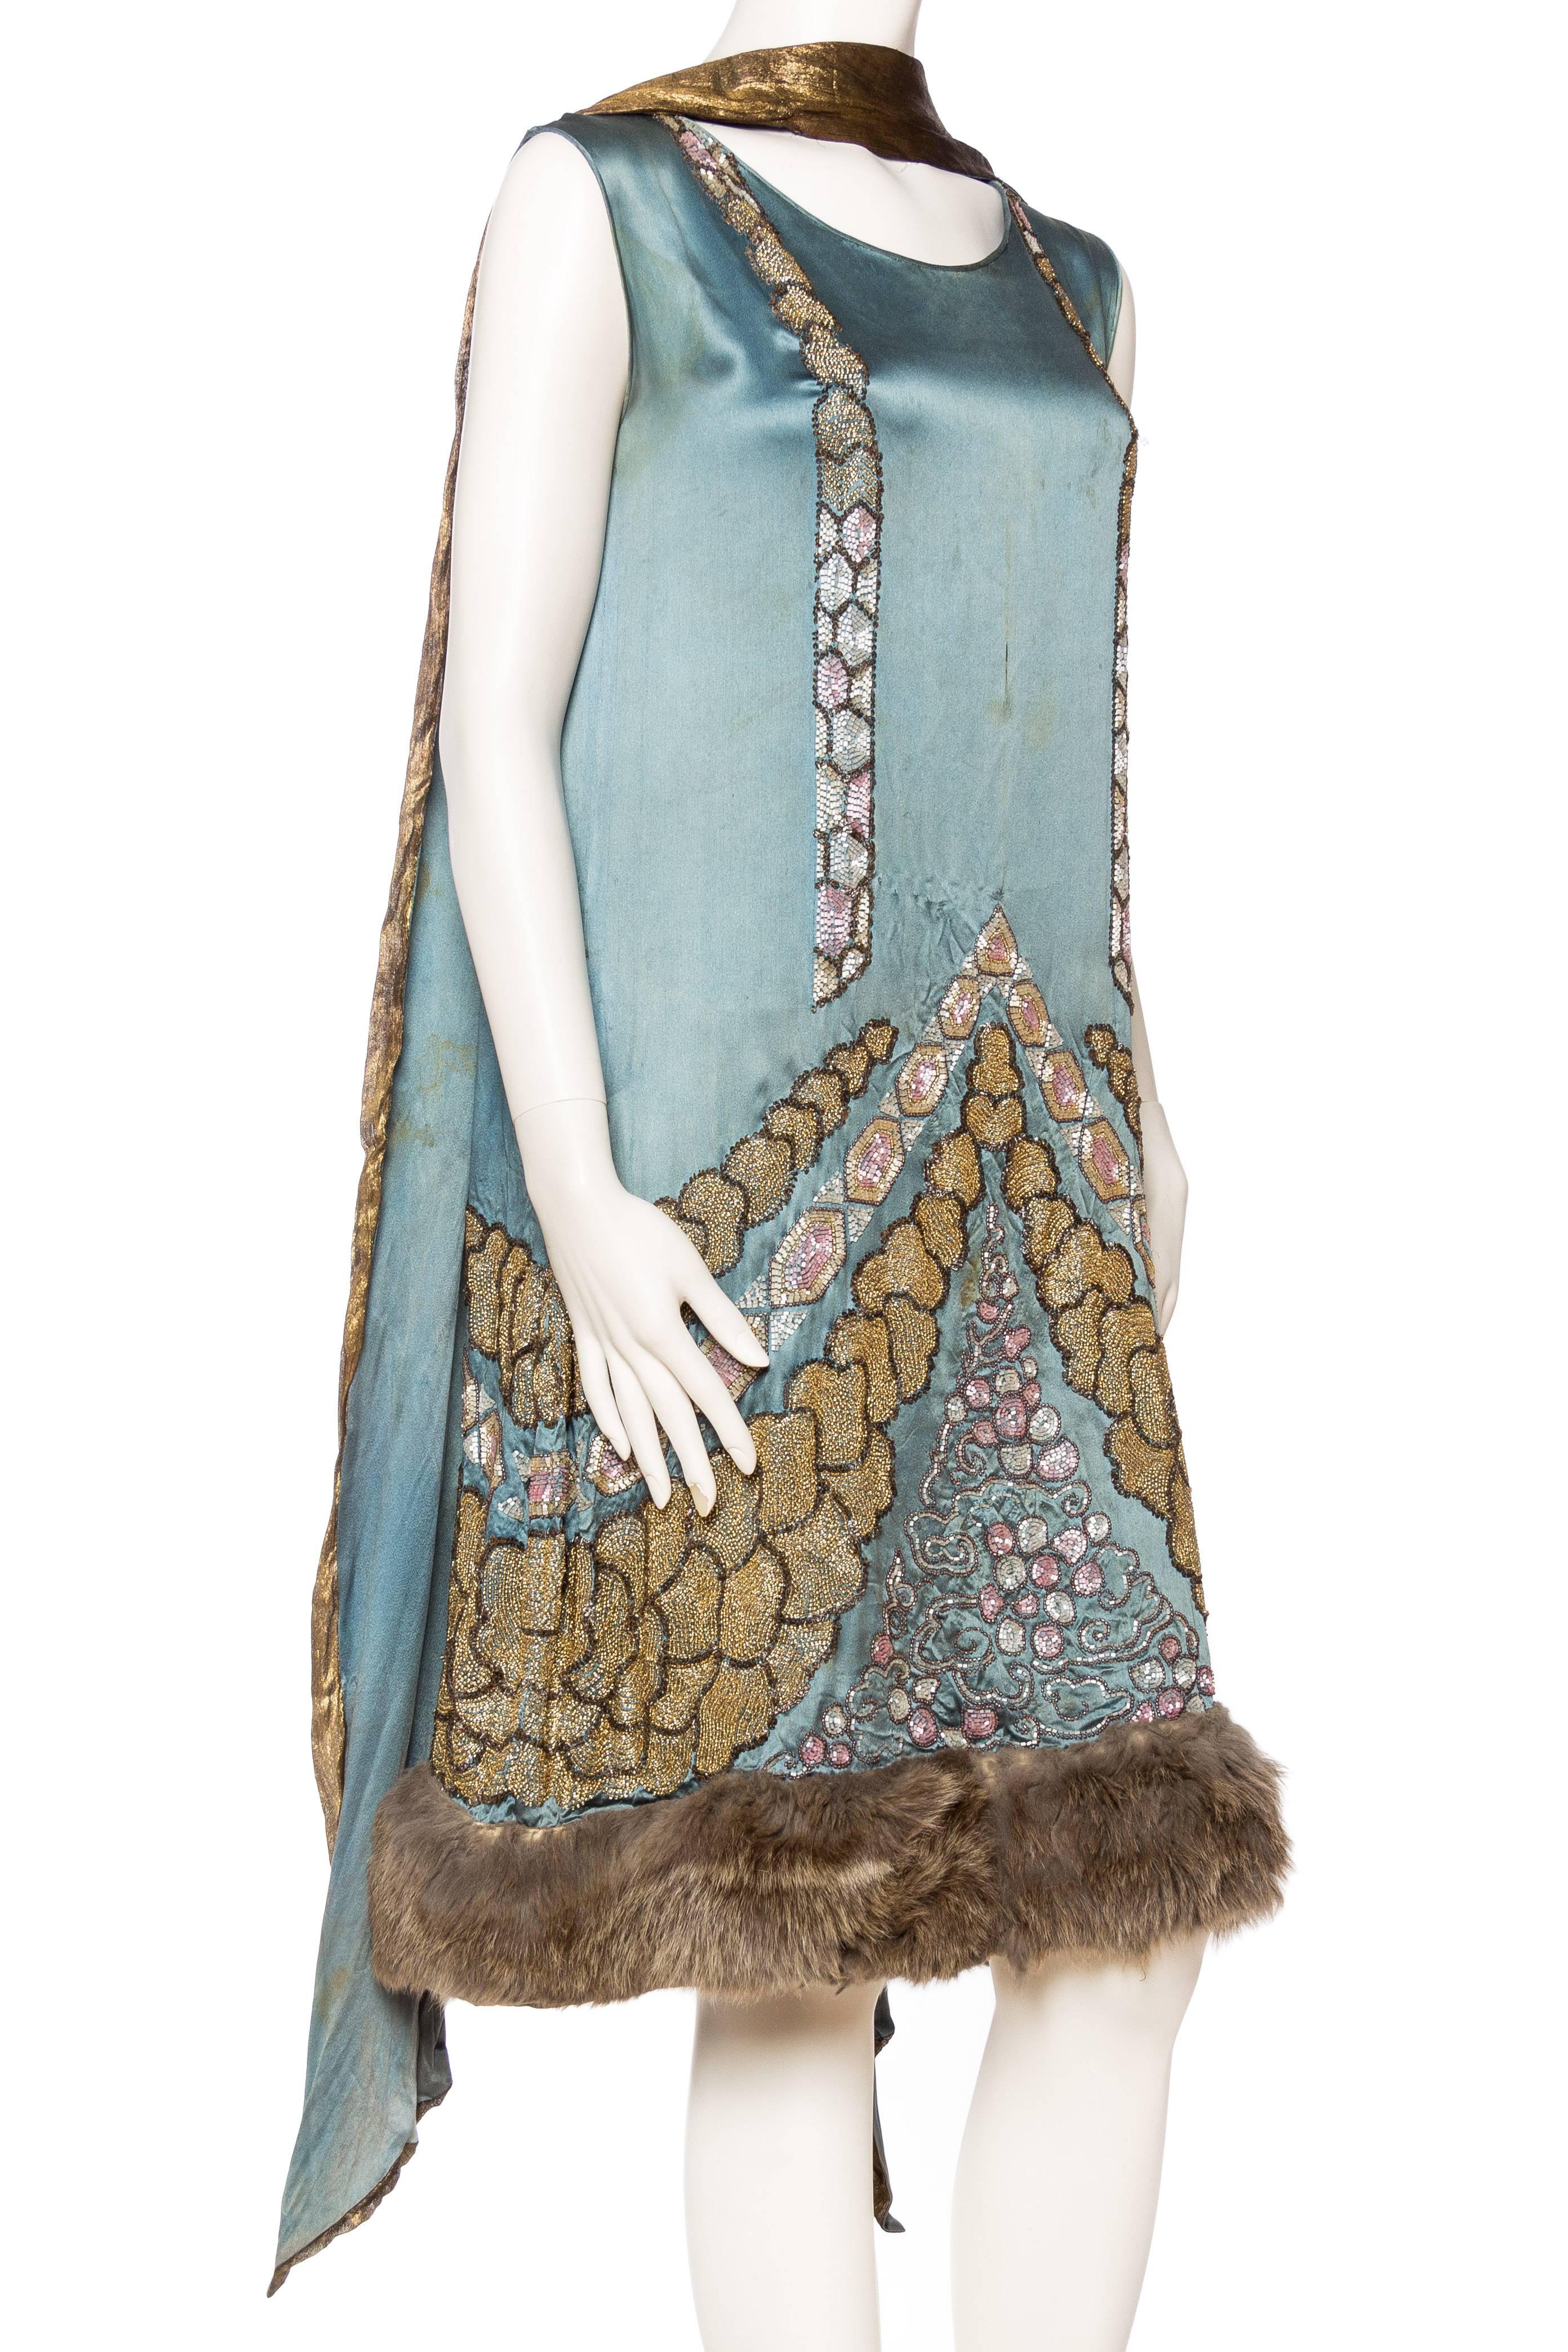 Women's 1920s Beaded Dress with Fur Hem and Lamé shawl